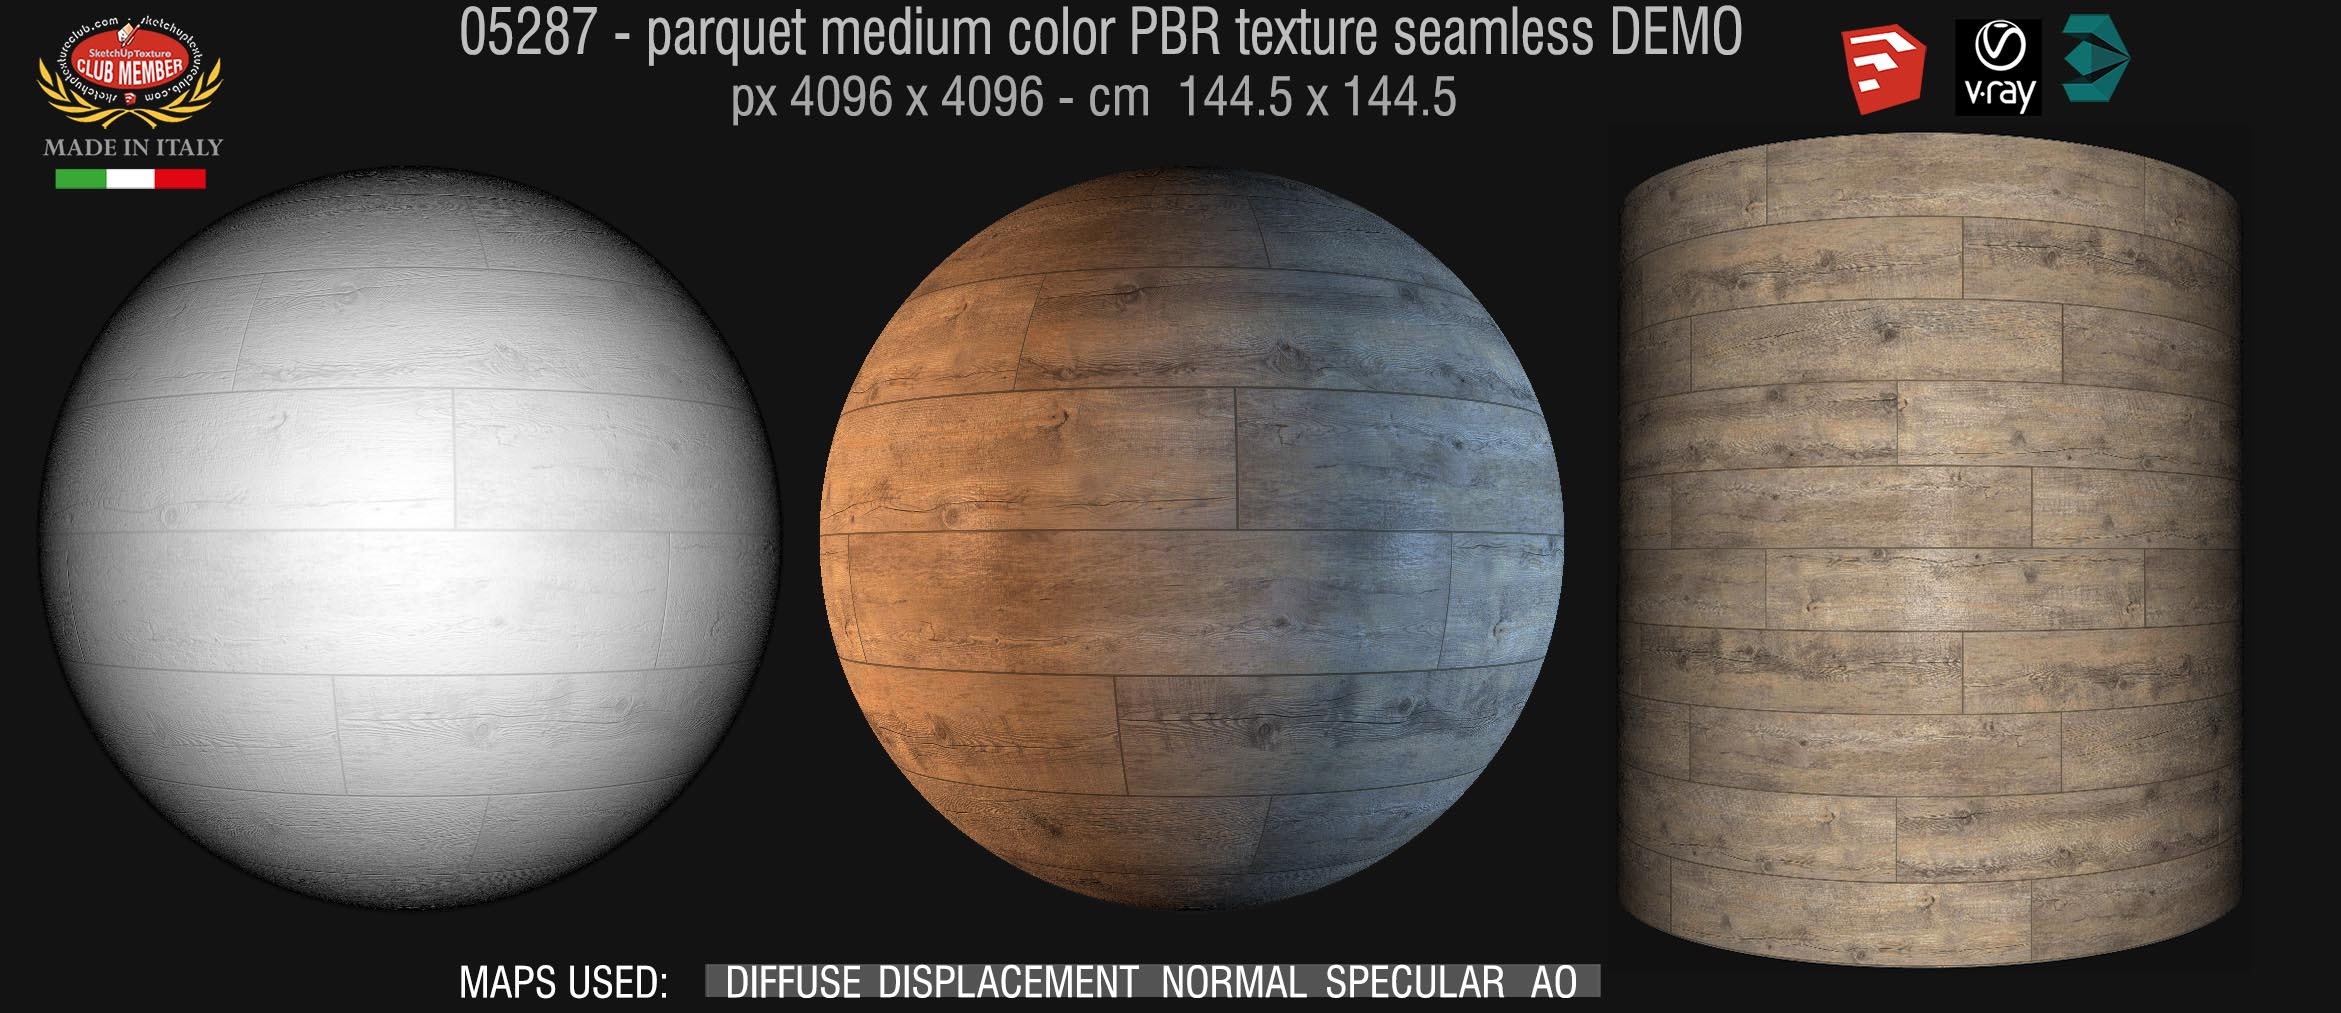 05287 parquet medium color PBR texture seamless DEMO